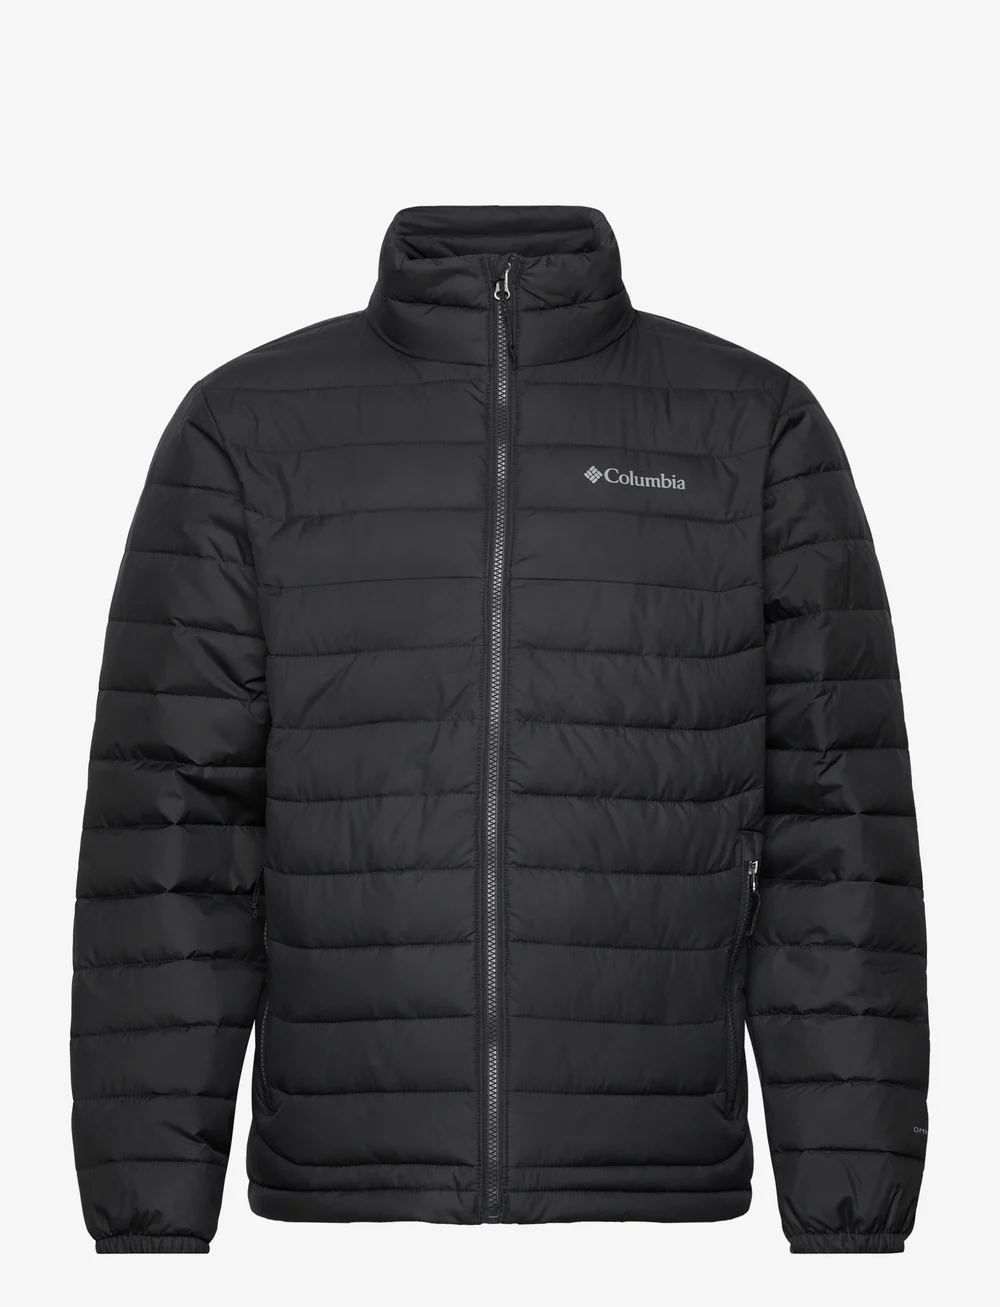 chant samfund Landbrugs Columbia Sportswear Powder Lite Jacket - Forede jakker | Boozt.com